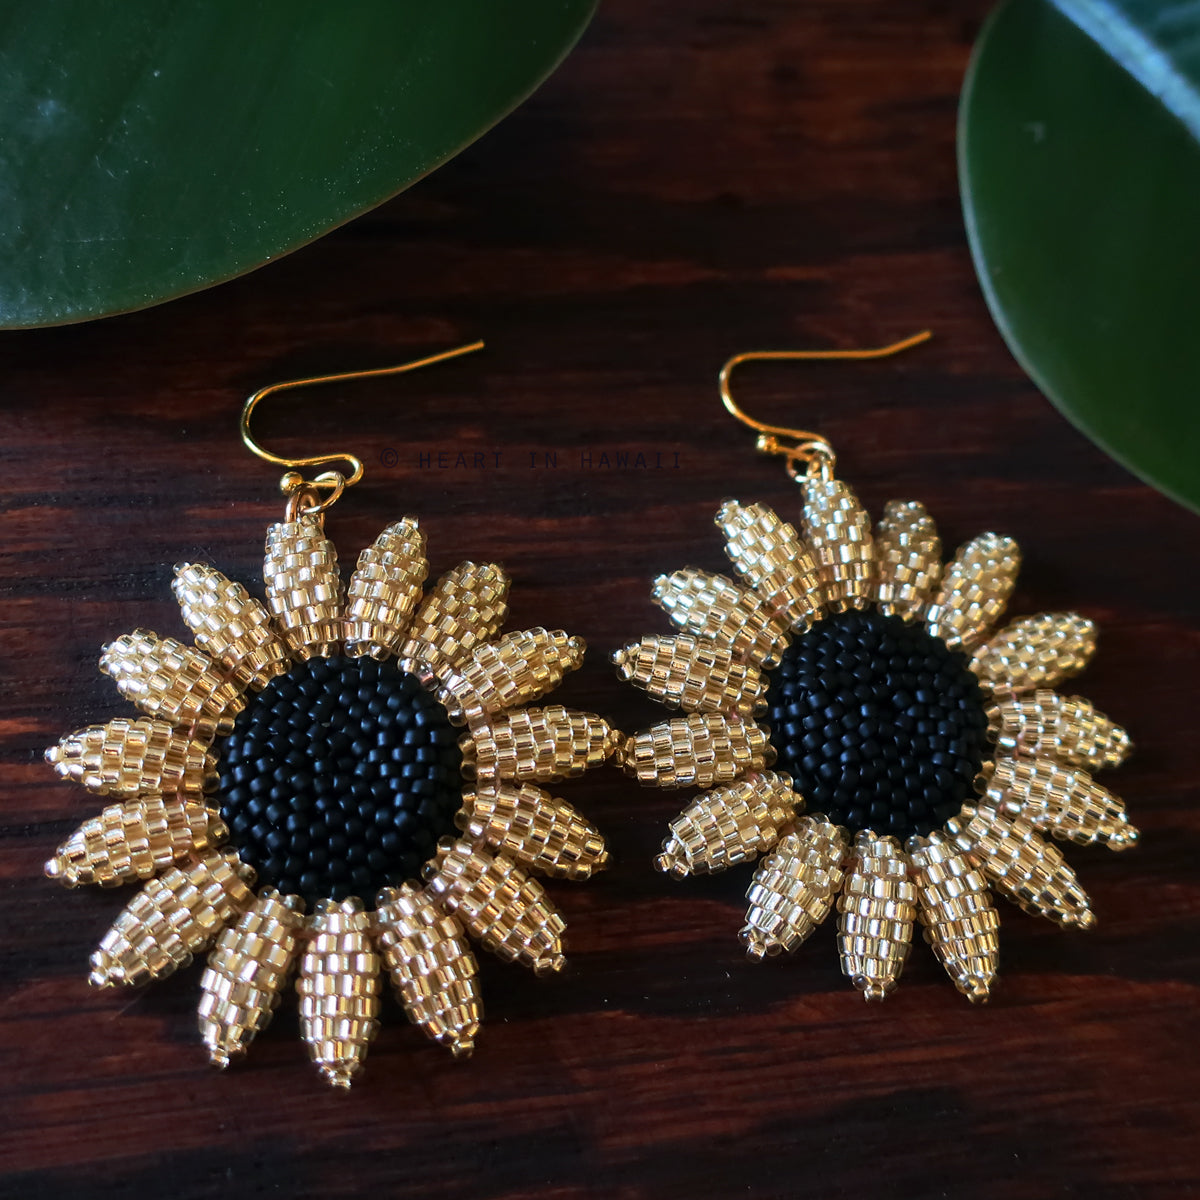 Heart in Hawaii Beaded Sunflower Earrings - Sparkly Gold